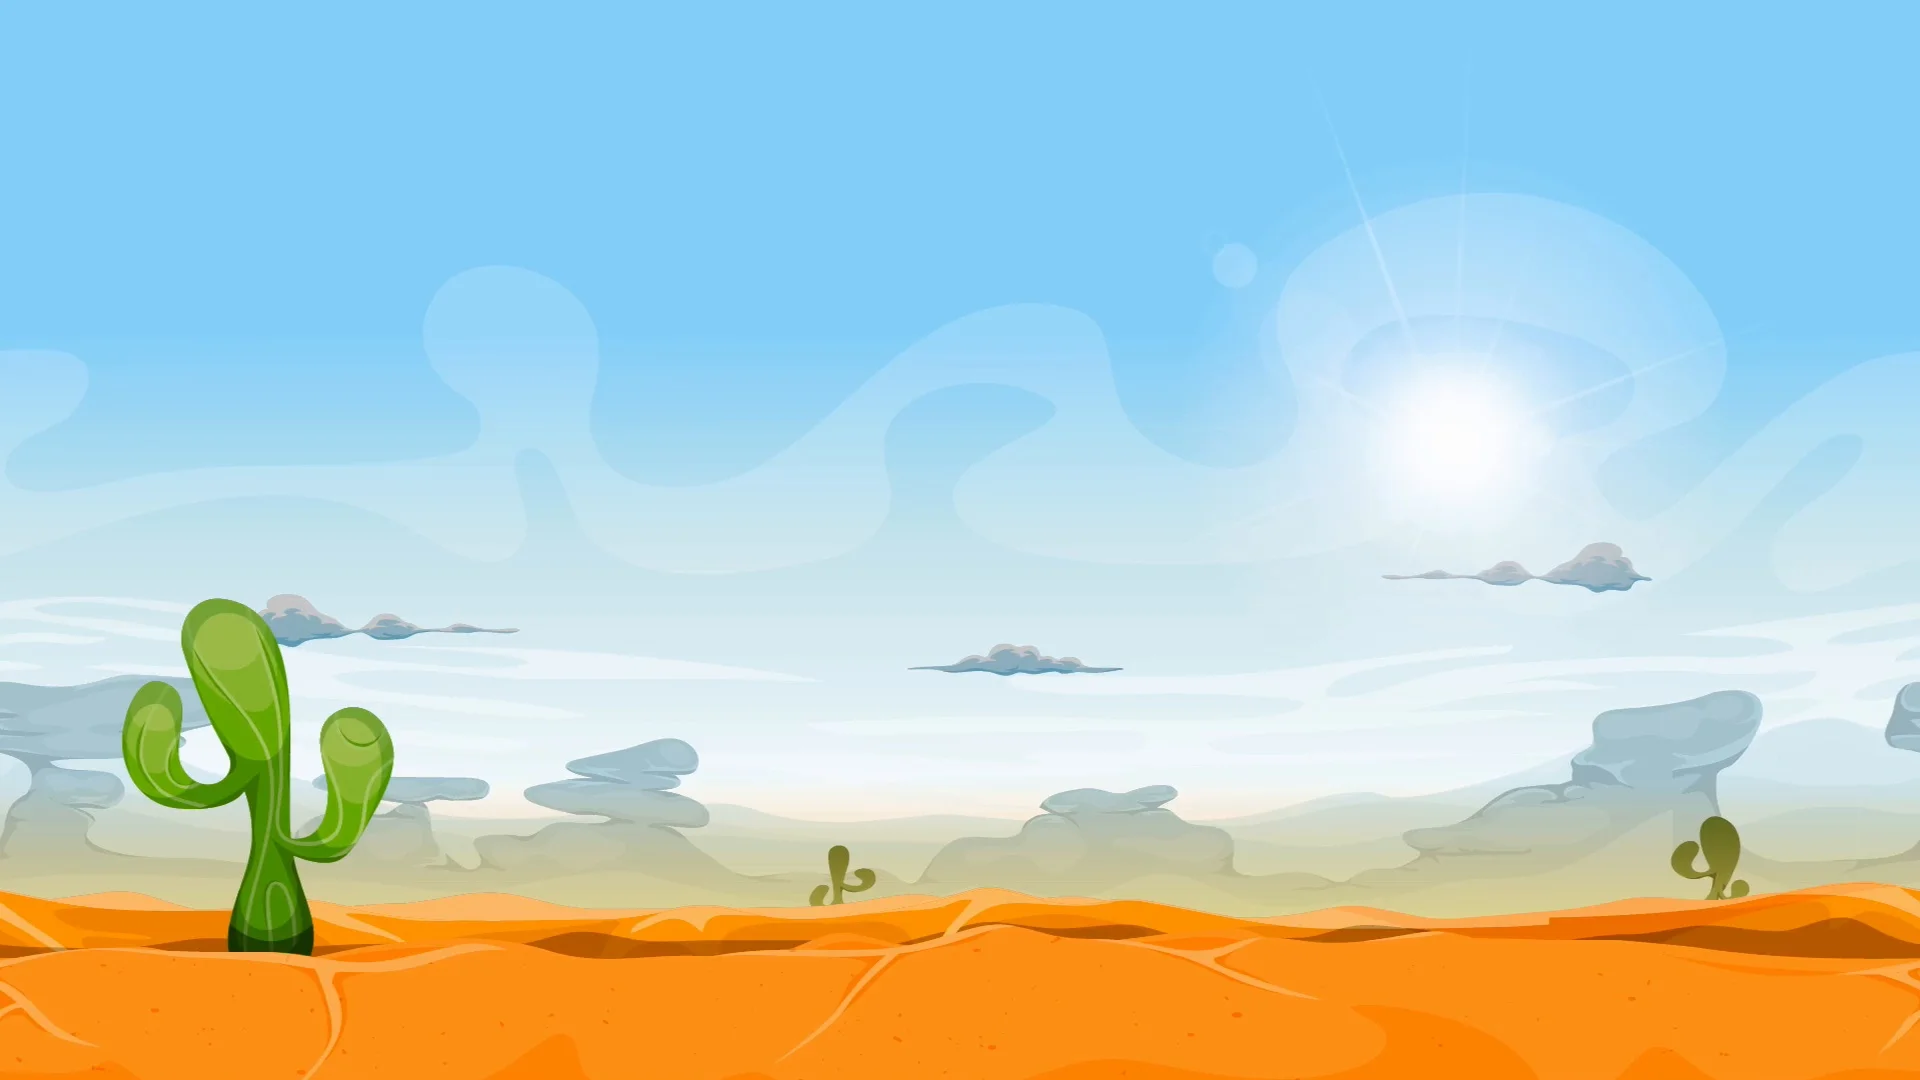 Traveling On Western Desert 4k Gif Animation Stock Video